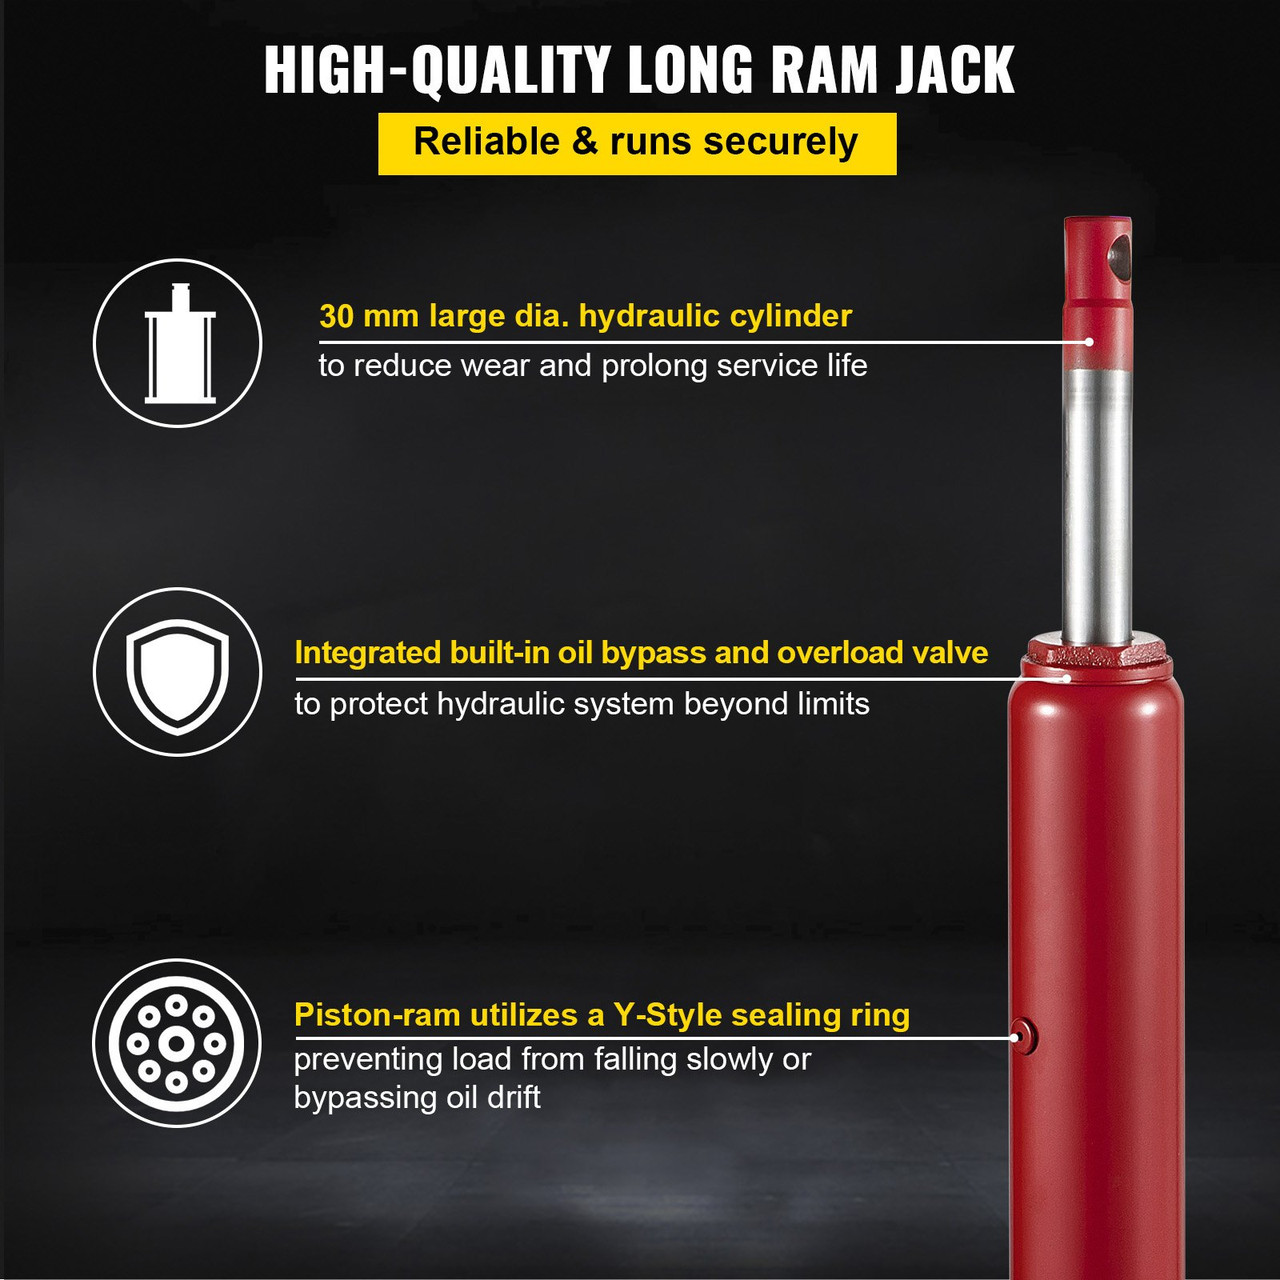 Hydraulic Long Ram Jack Manual Dual Pump 8 Ton Engine Lift Cherry Picker